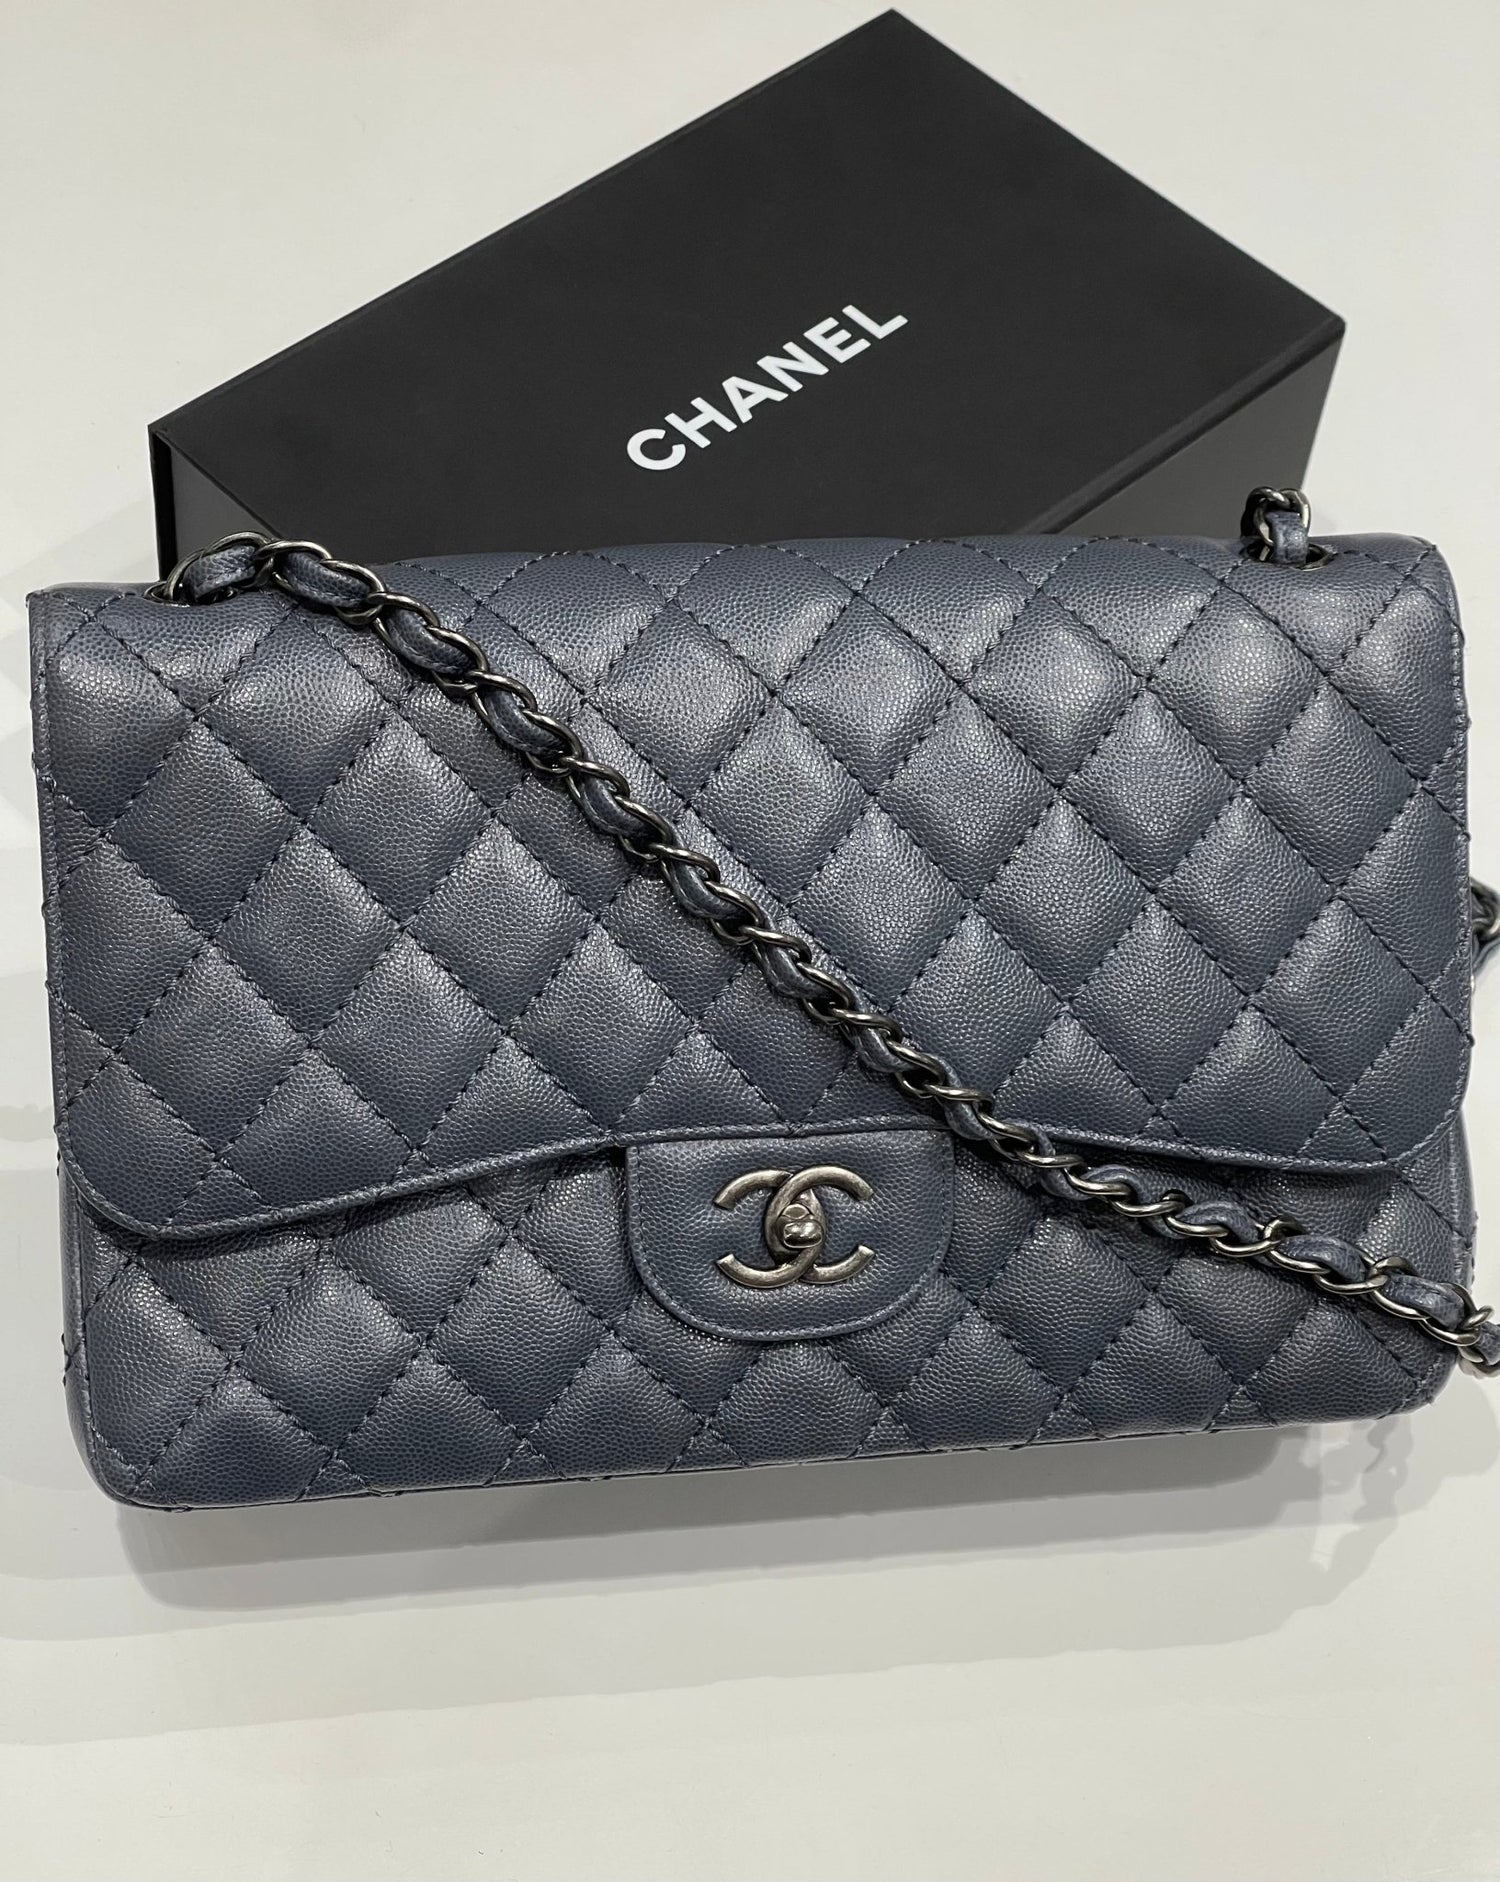 Chanel - Sac classique jumbo Bleu Gris - Les Folies d&